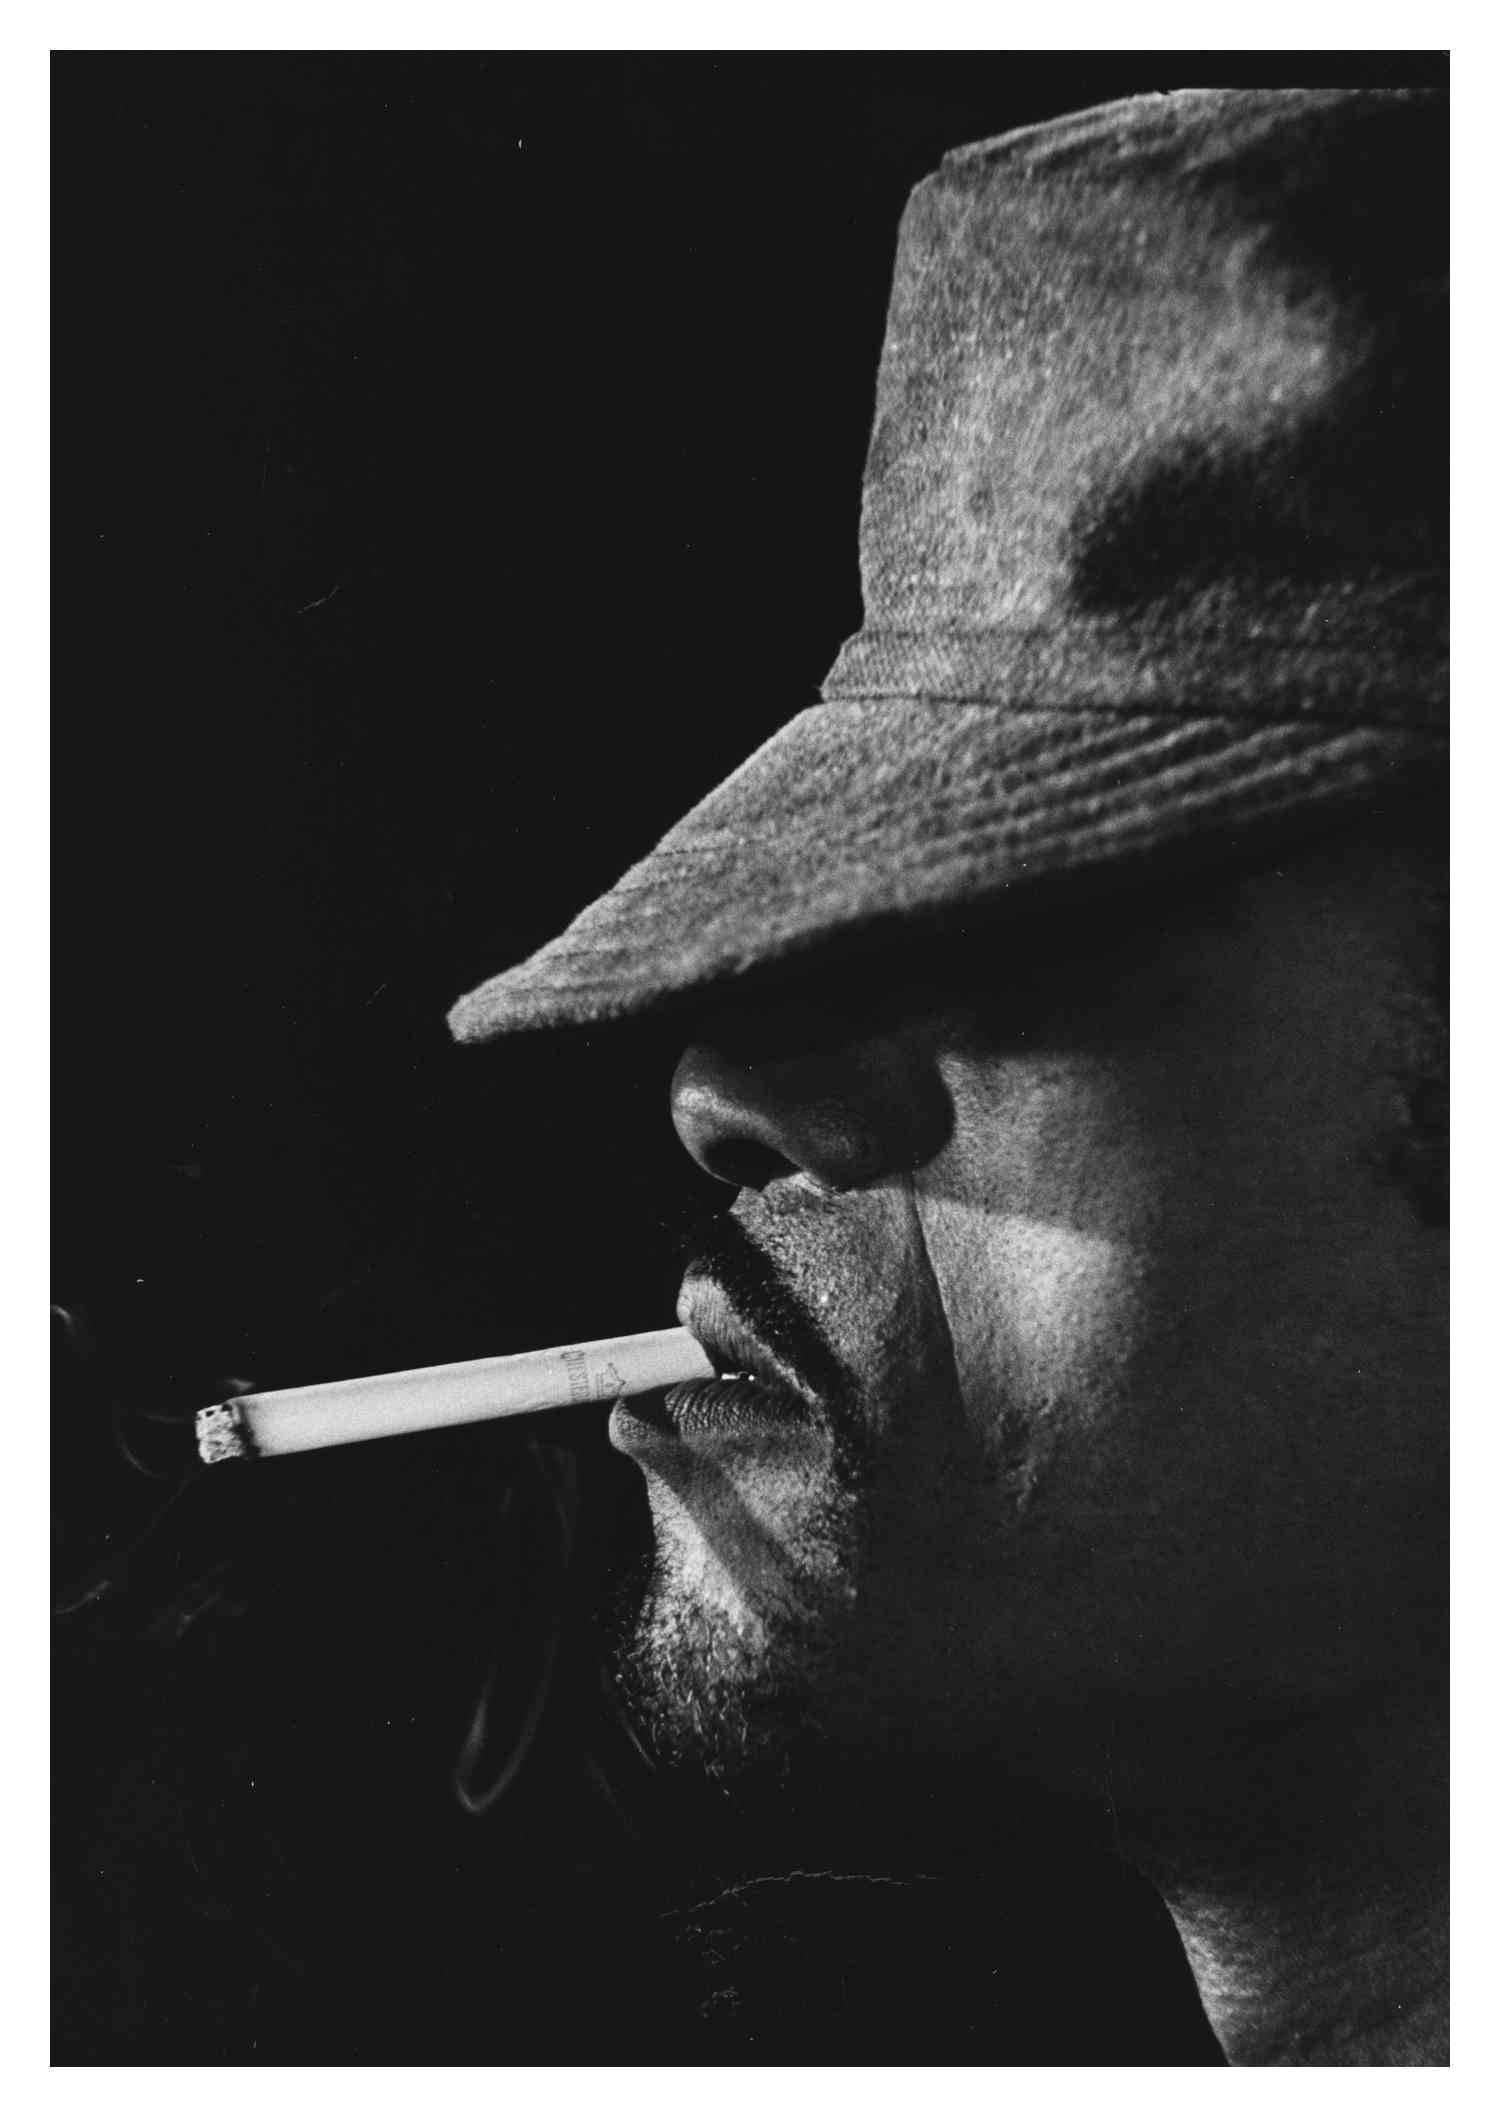 Unknown Portrait Photograph - Sammy Davis Jr. "The King of Cool" Fine Art Print